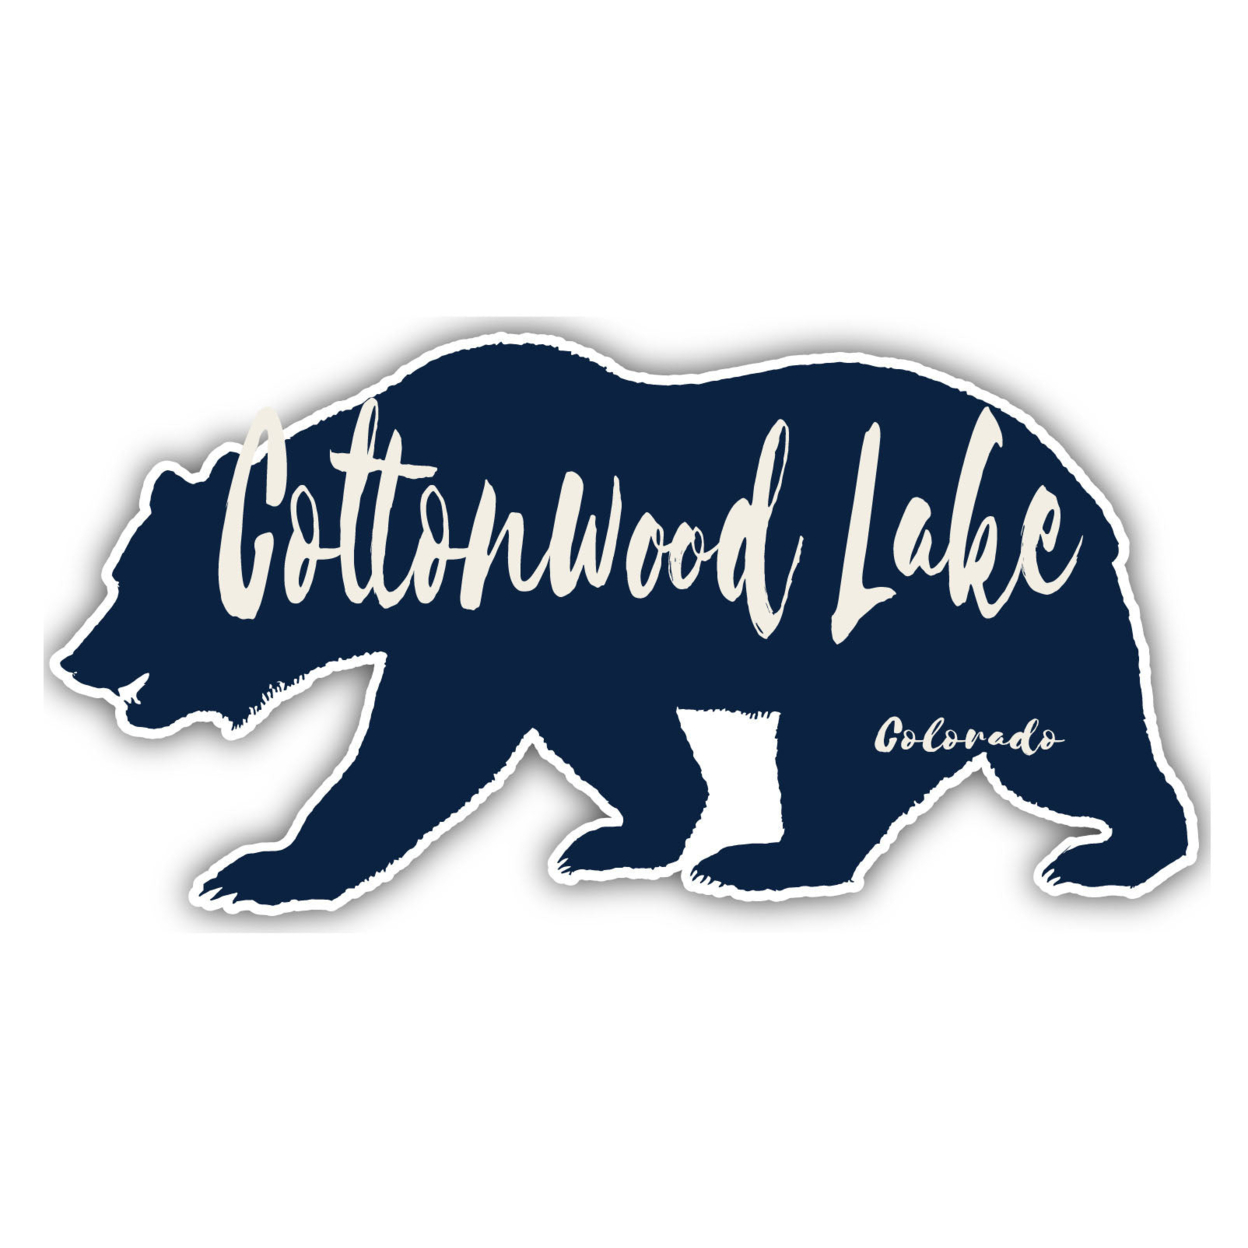 Cottonwood Lake Colorado Souvenir Decorative Stickers (Choose Theme And Size) - 4-Pack, 10-Inch, Bear